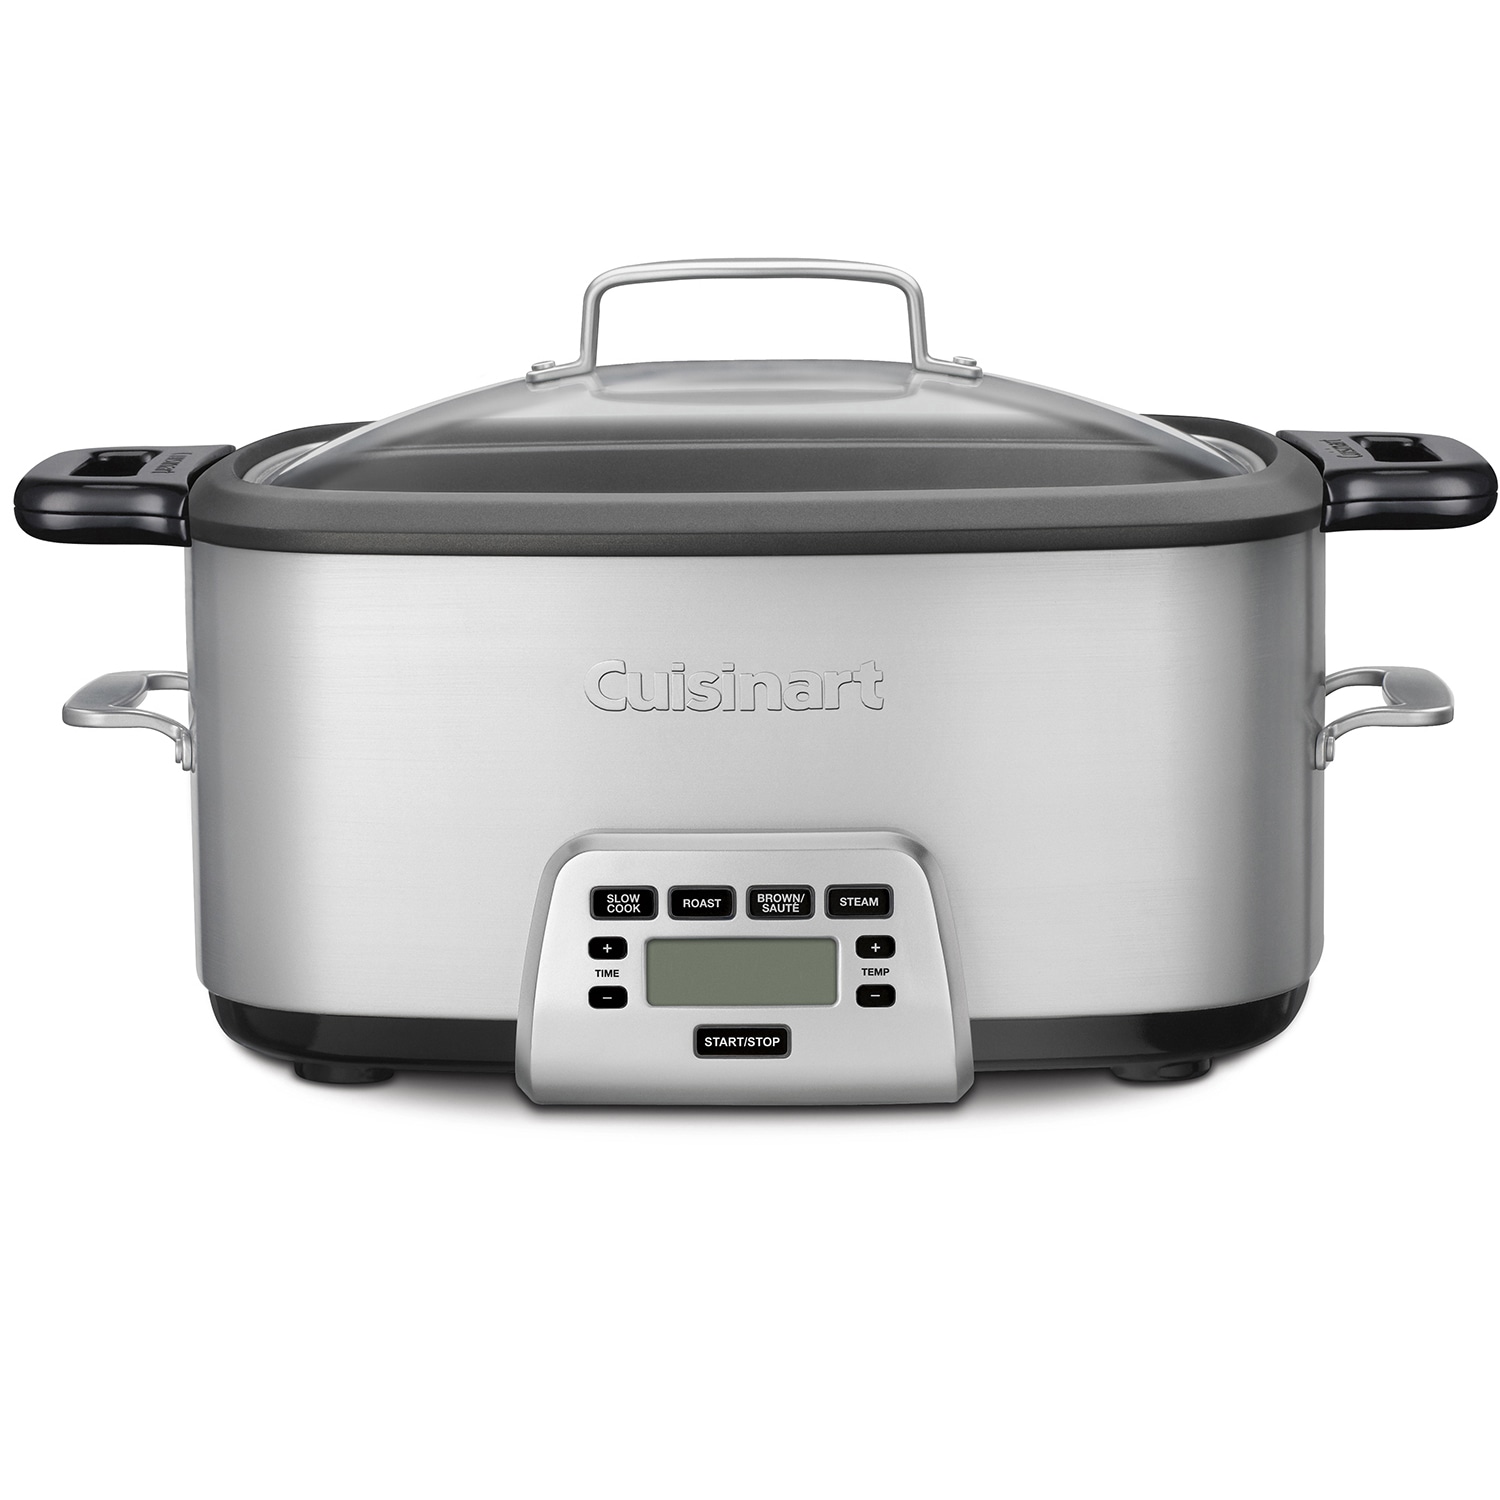 Crock-Pot 7 Quart Slow Cooker with Programmable Controls and Digital Timer,  Polished Platinum